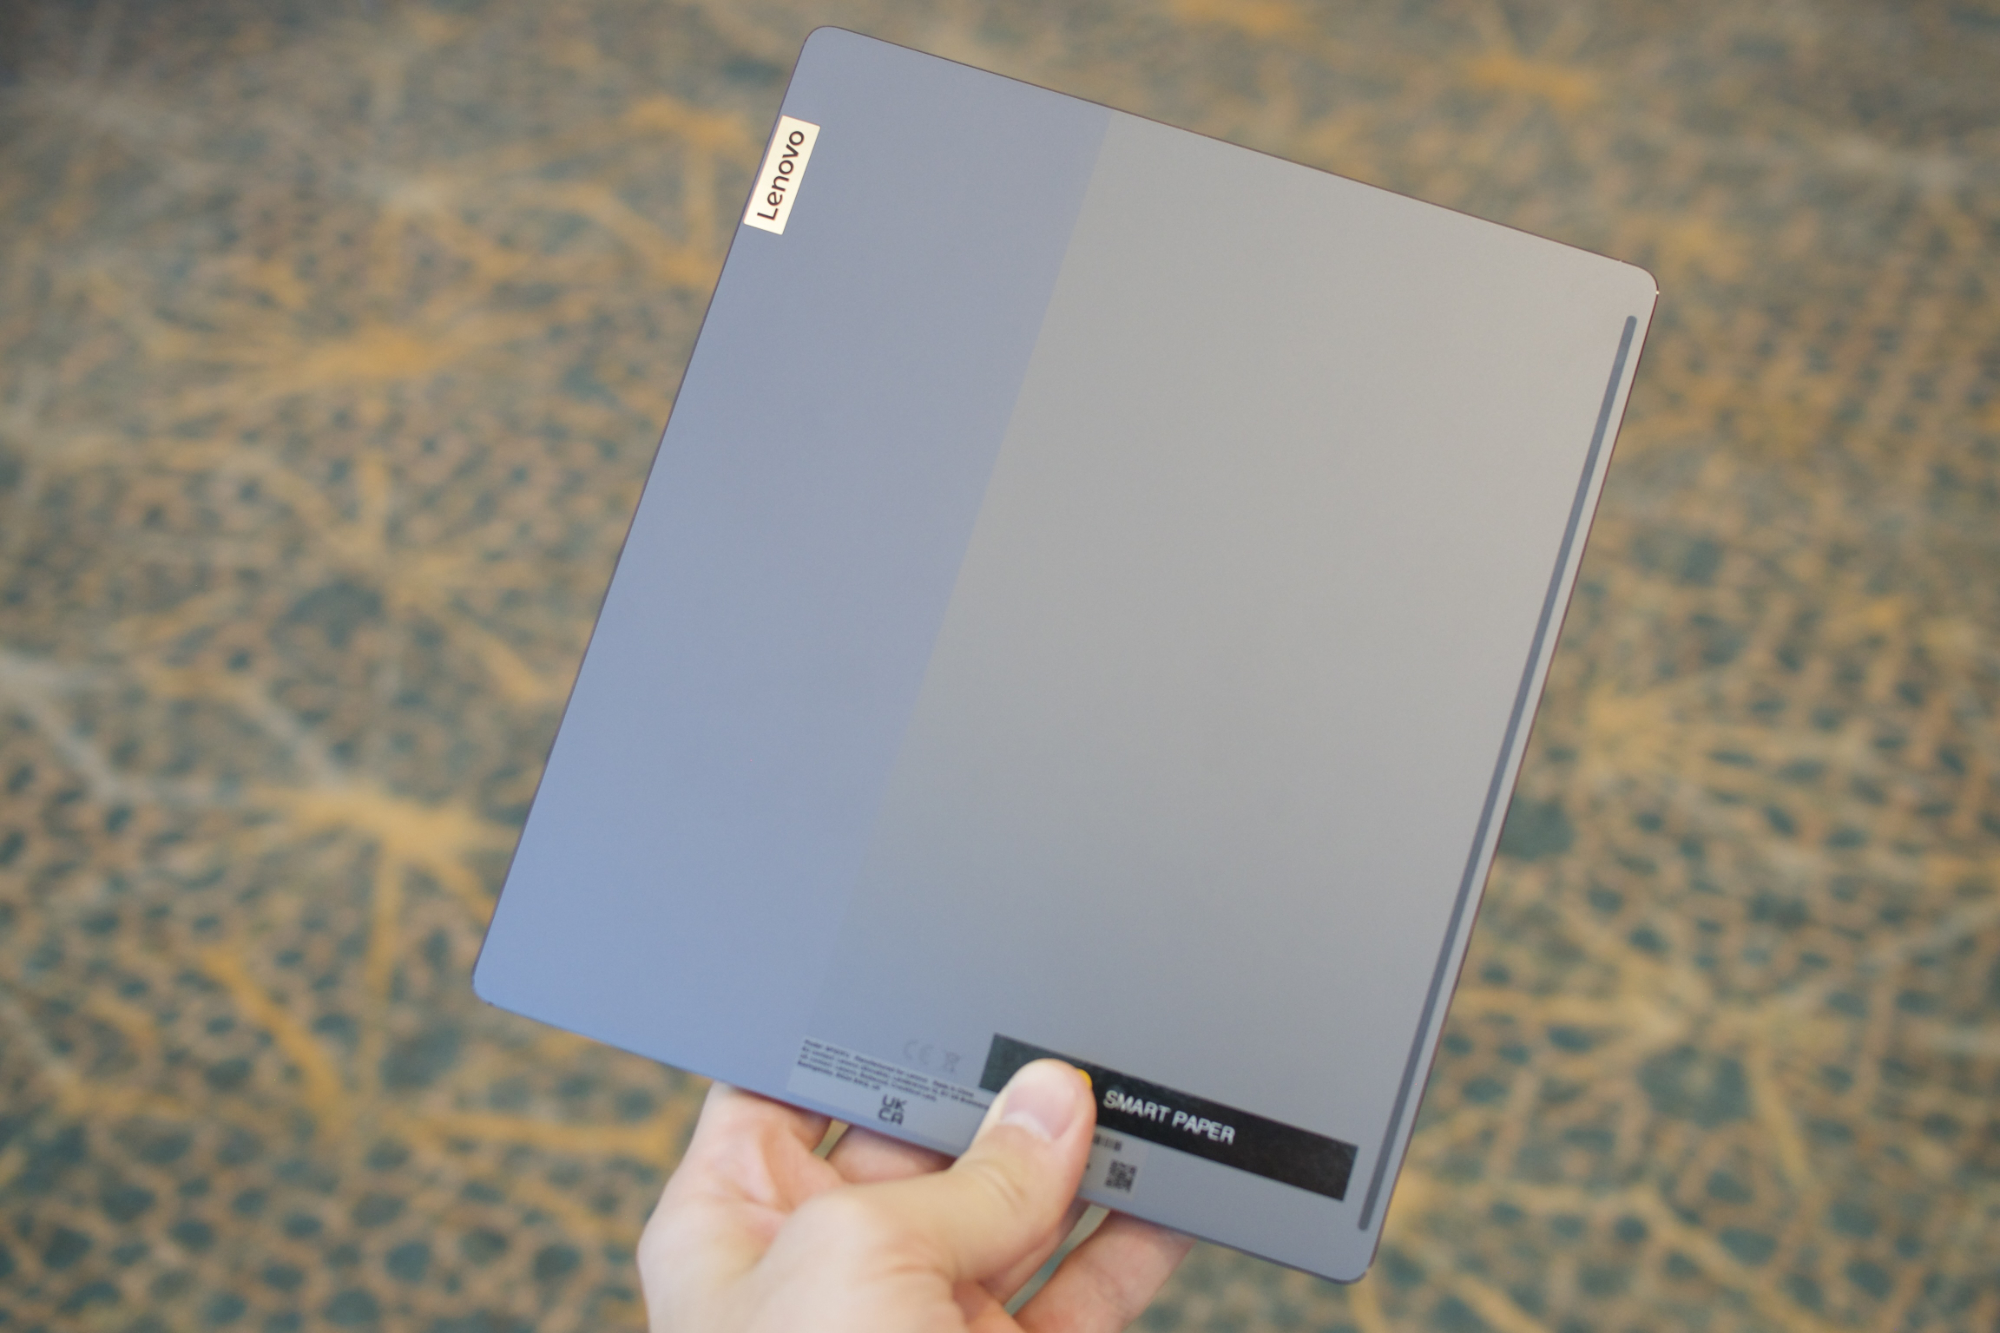 Lenovo Smart Paper Vs. Kindle Scribe: Which E-Reader Should You Buy?